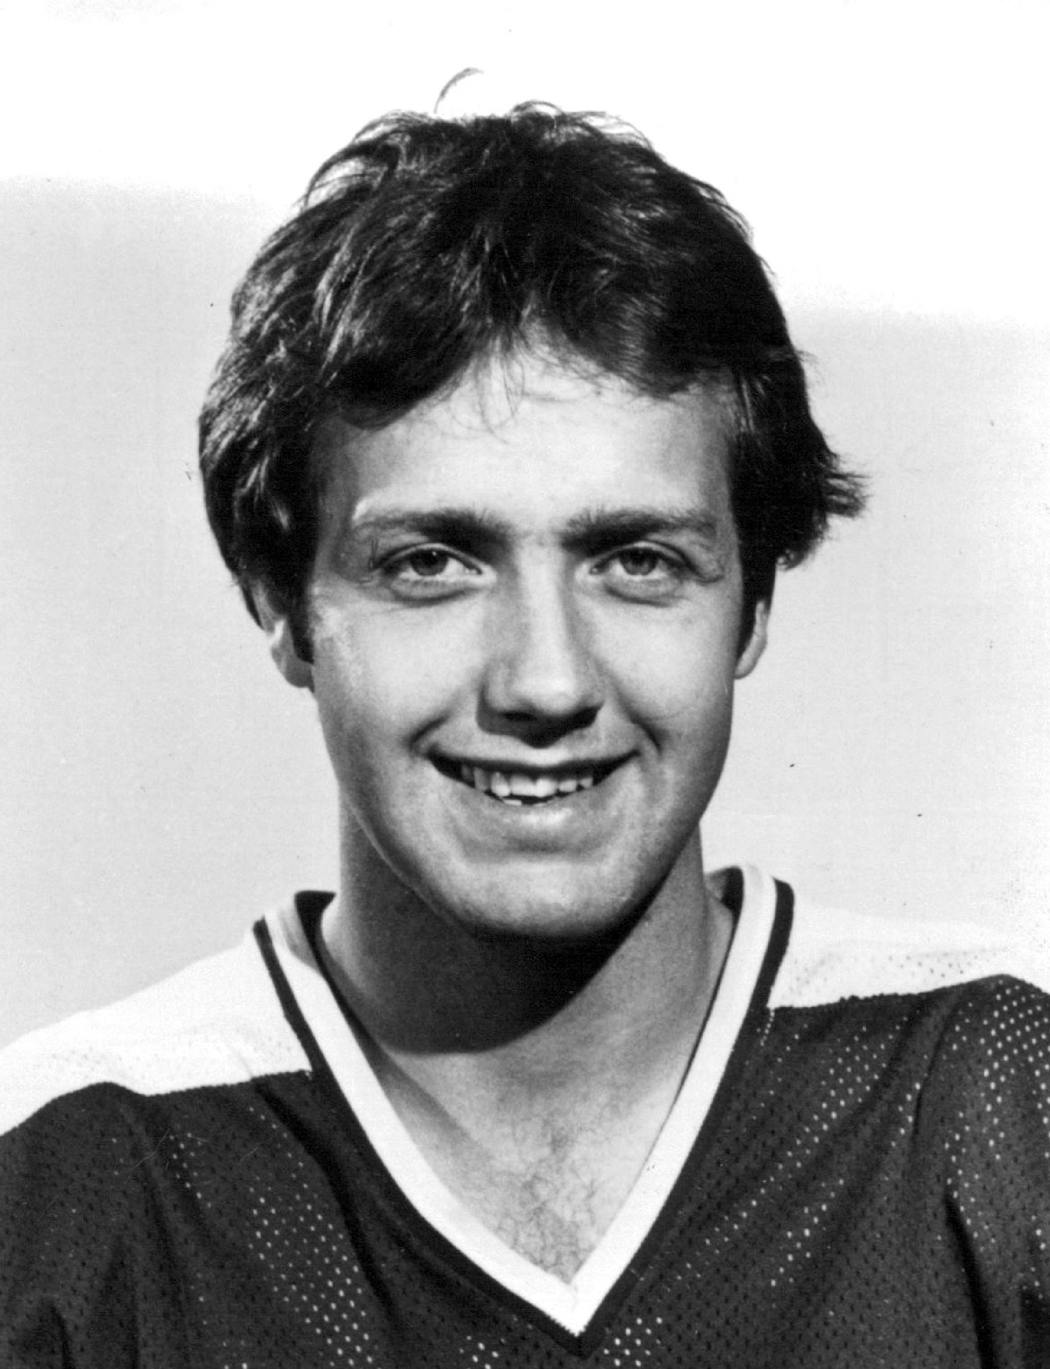 Former North Star defenseman Brad Maxwell (1981 photo)